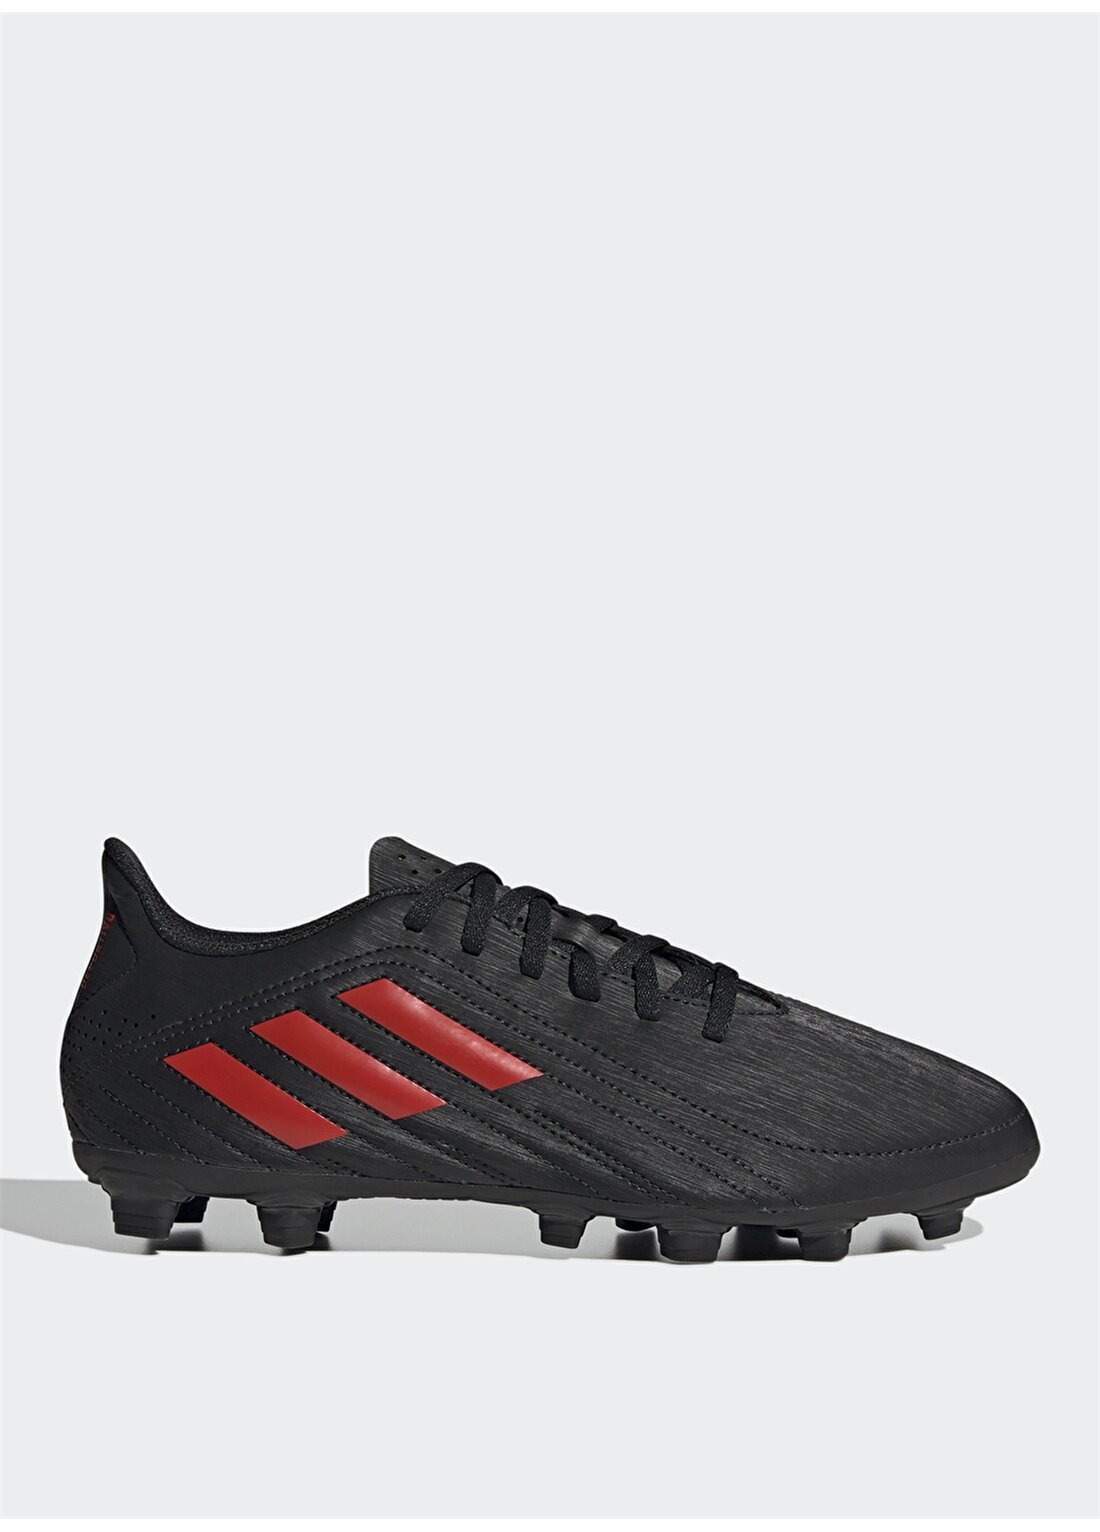 Adidas Siyah Erkek Futbol Ayakkabısı FV7911 DEPORTIVO FXG